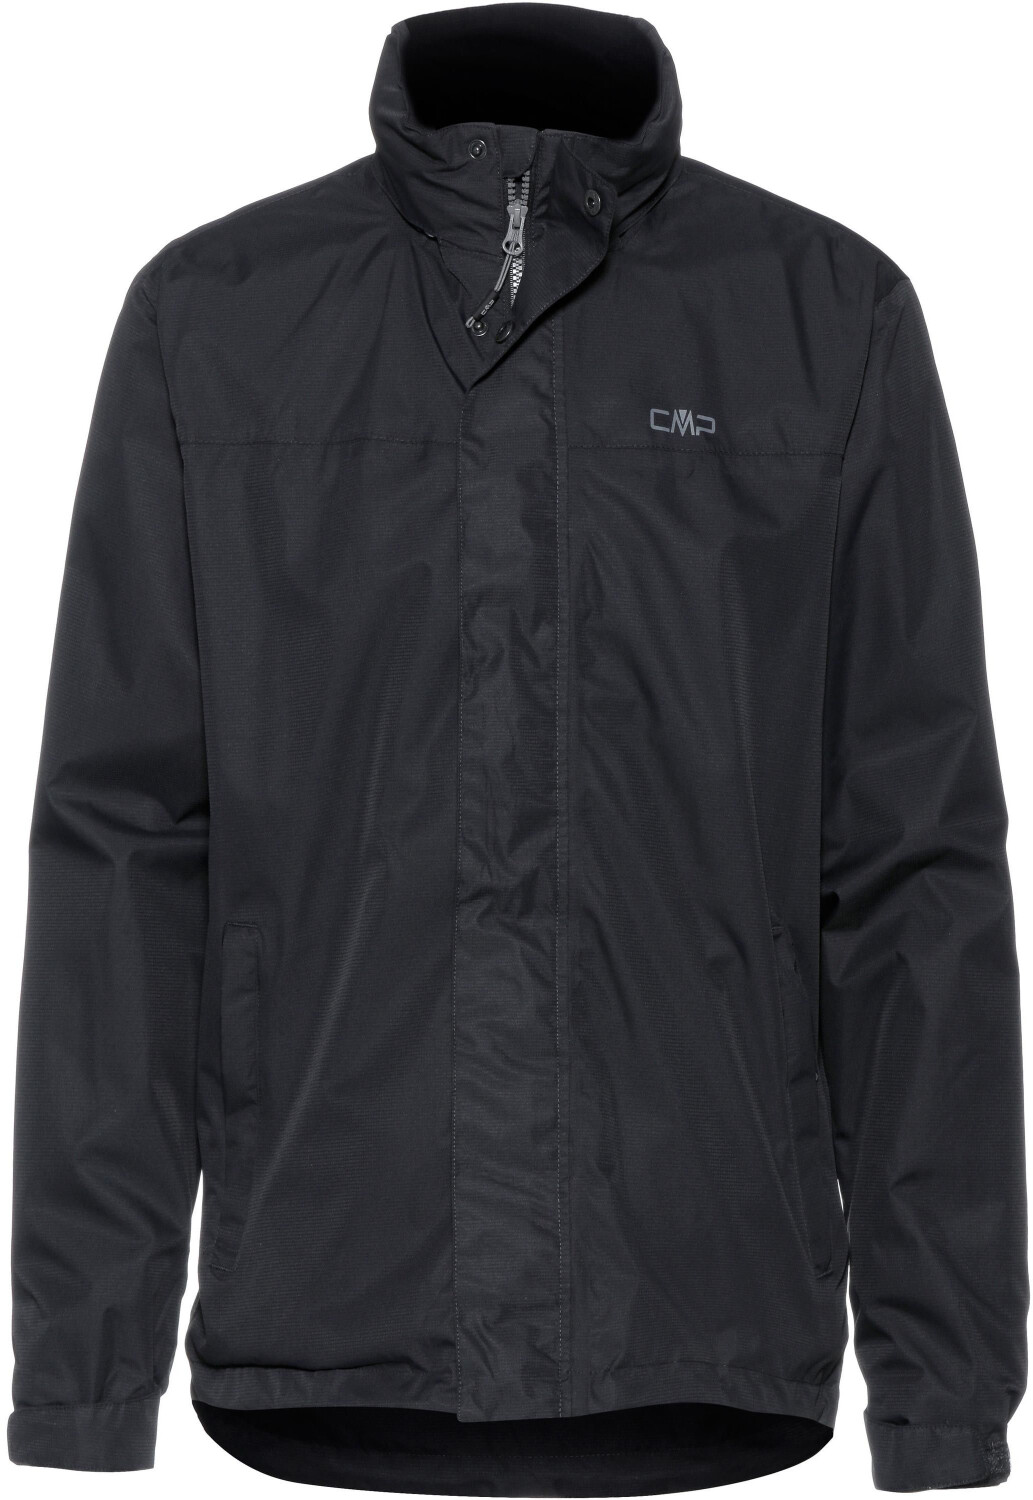 CMP € (39X7367) in 21,99 | fabric bei Preisvergleich Waterproof Ripstop ab Jacket